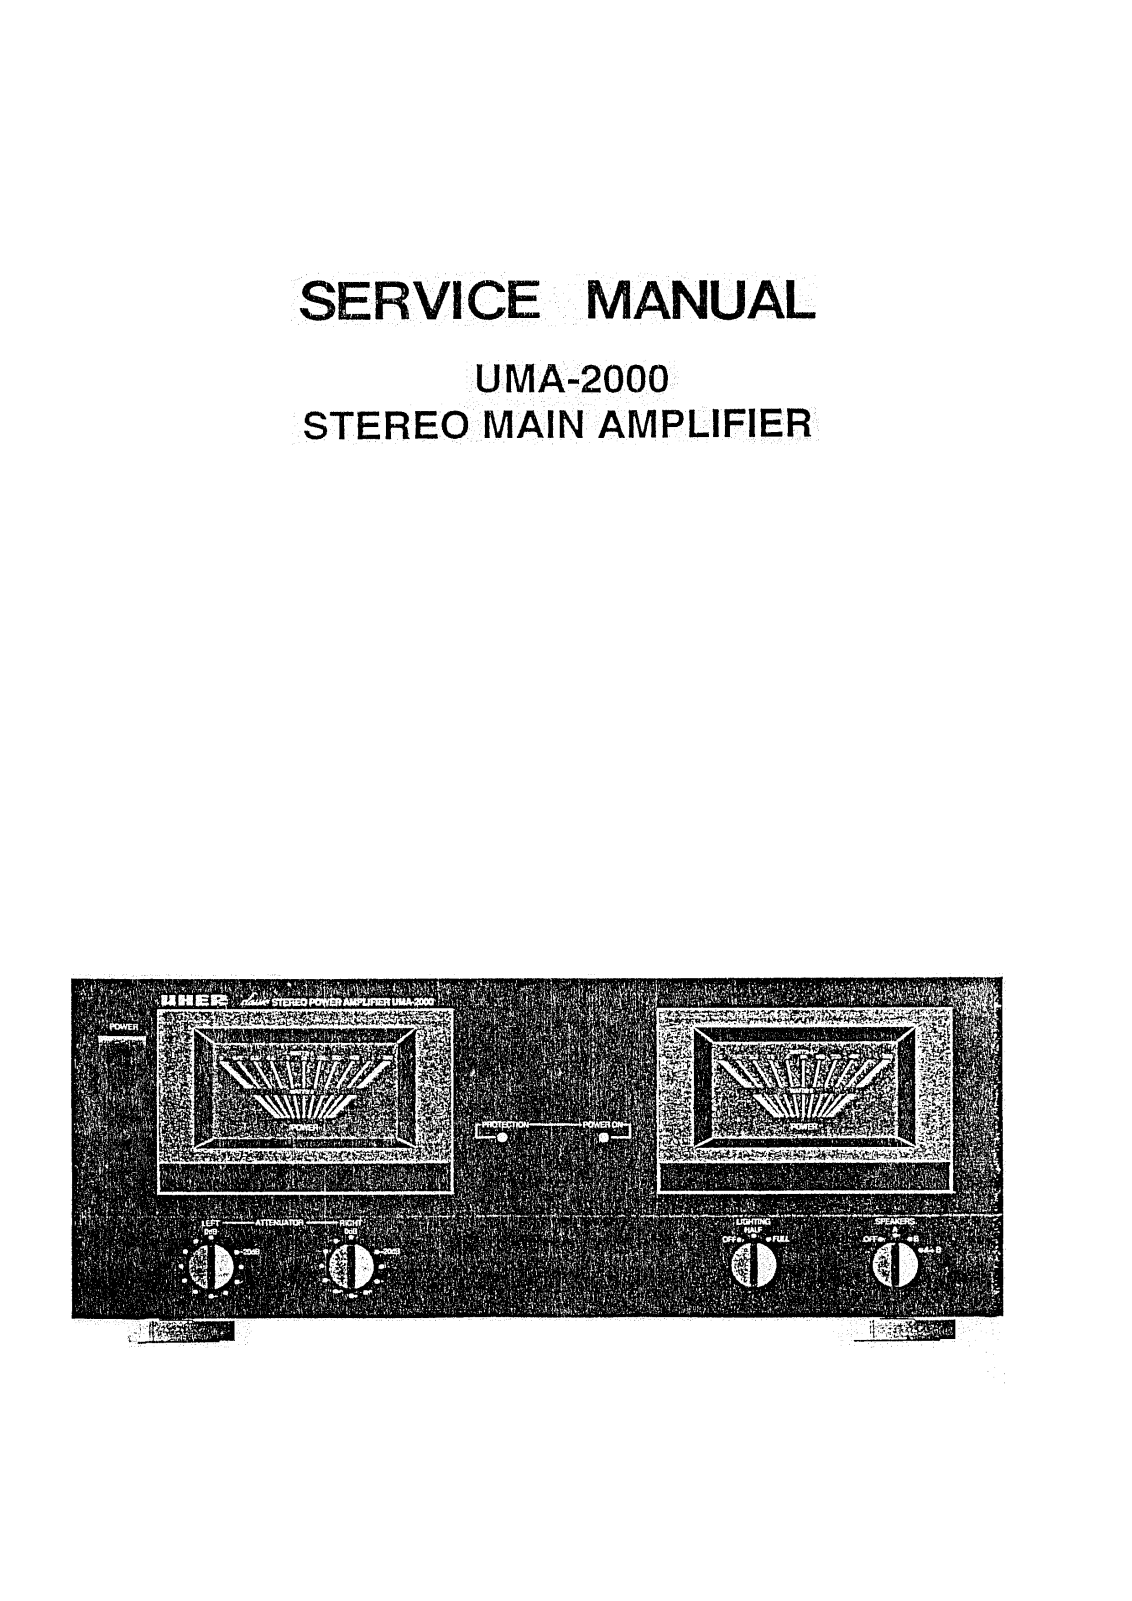 Uher UMA-2000 Service manual